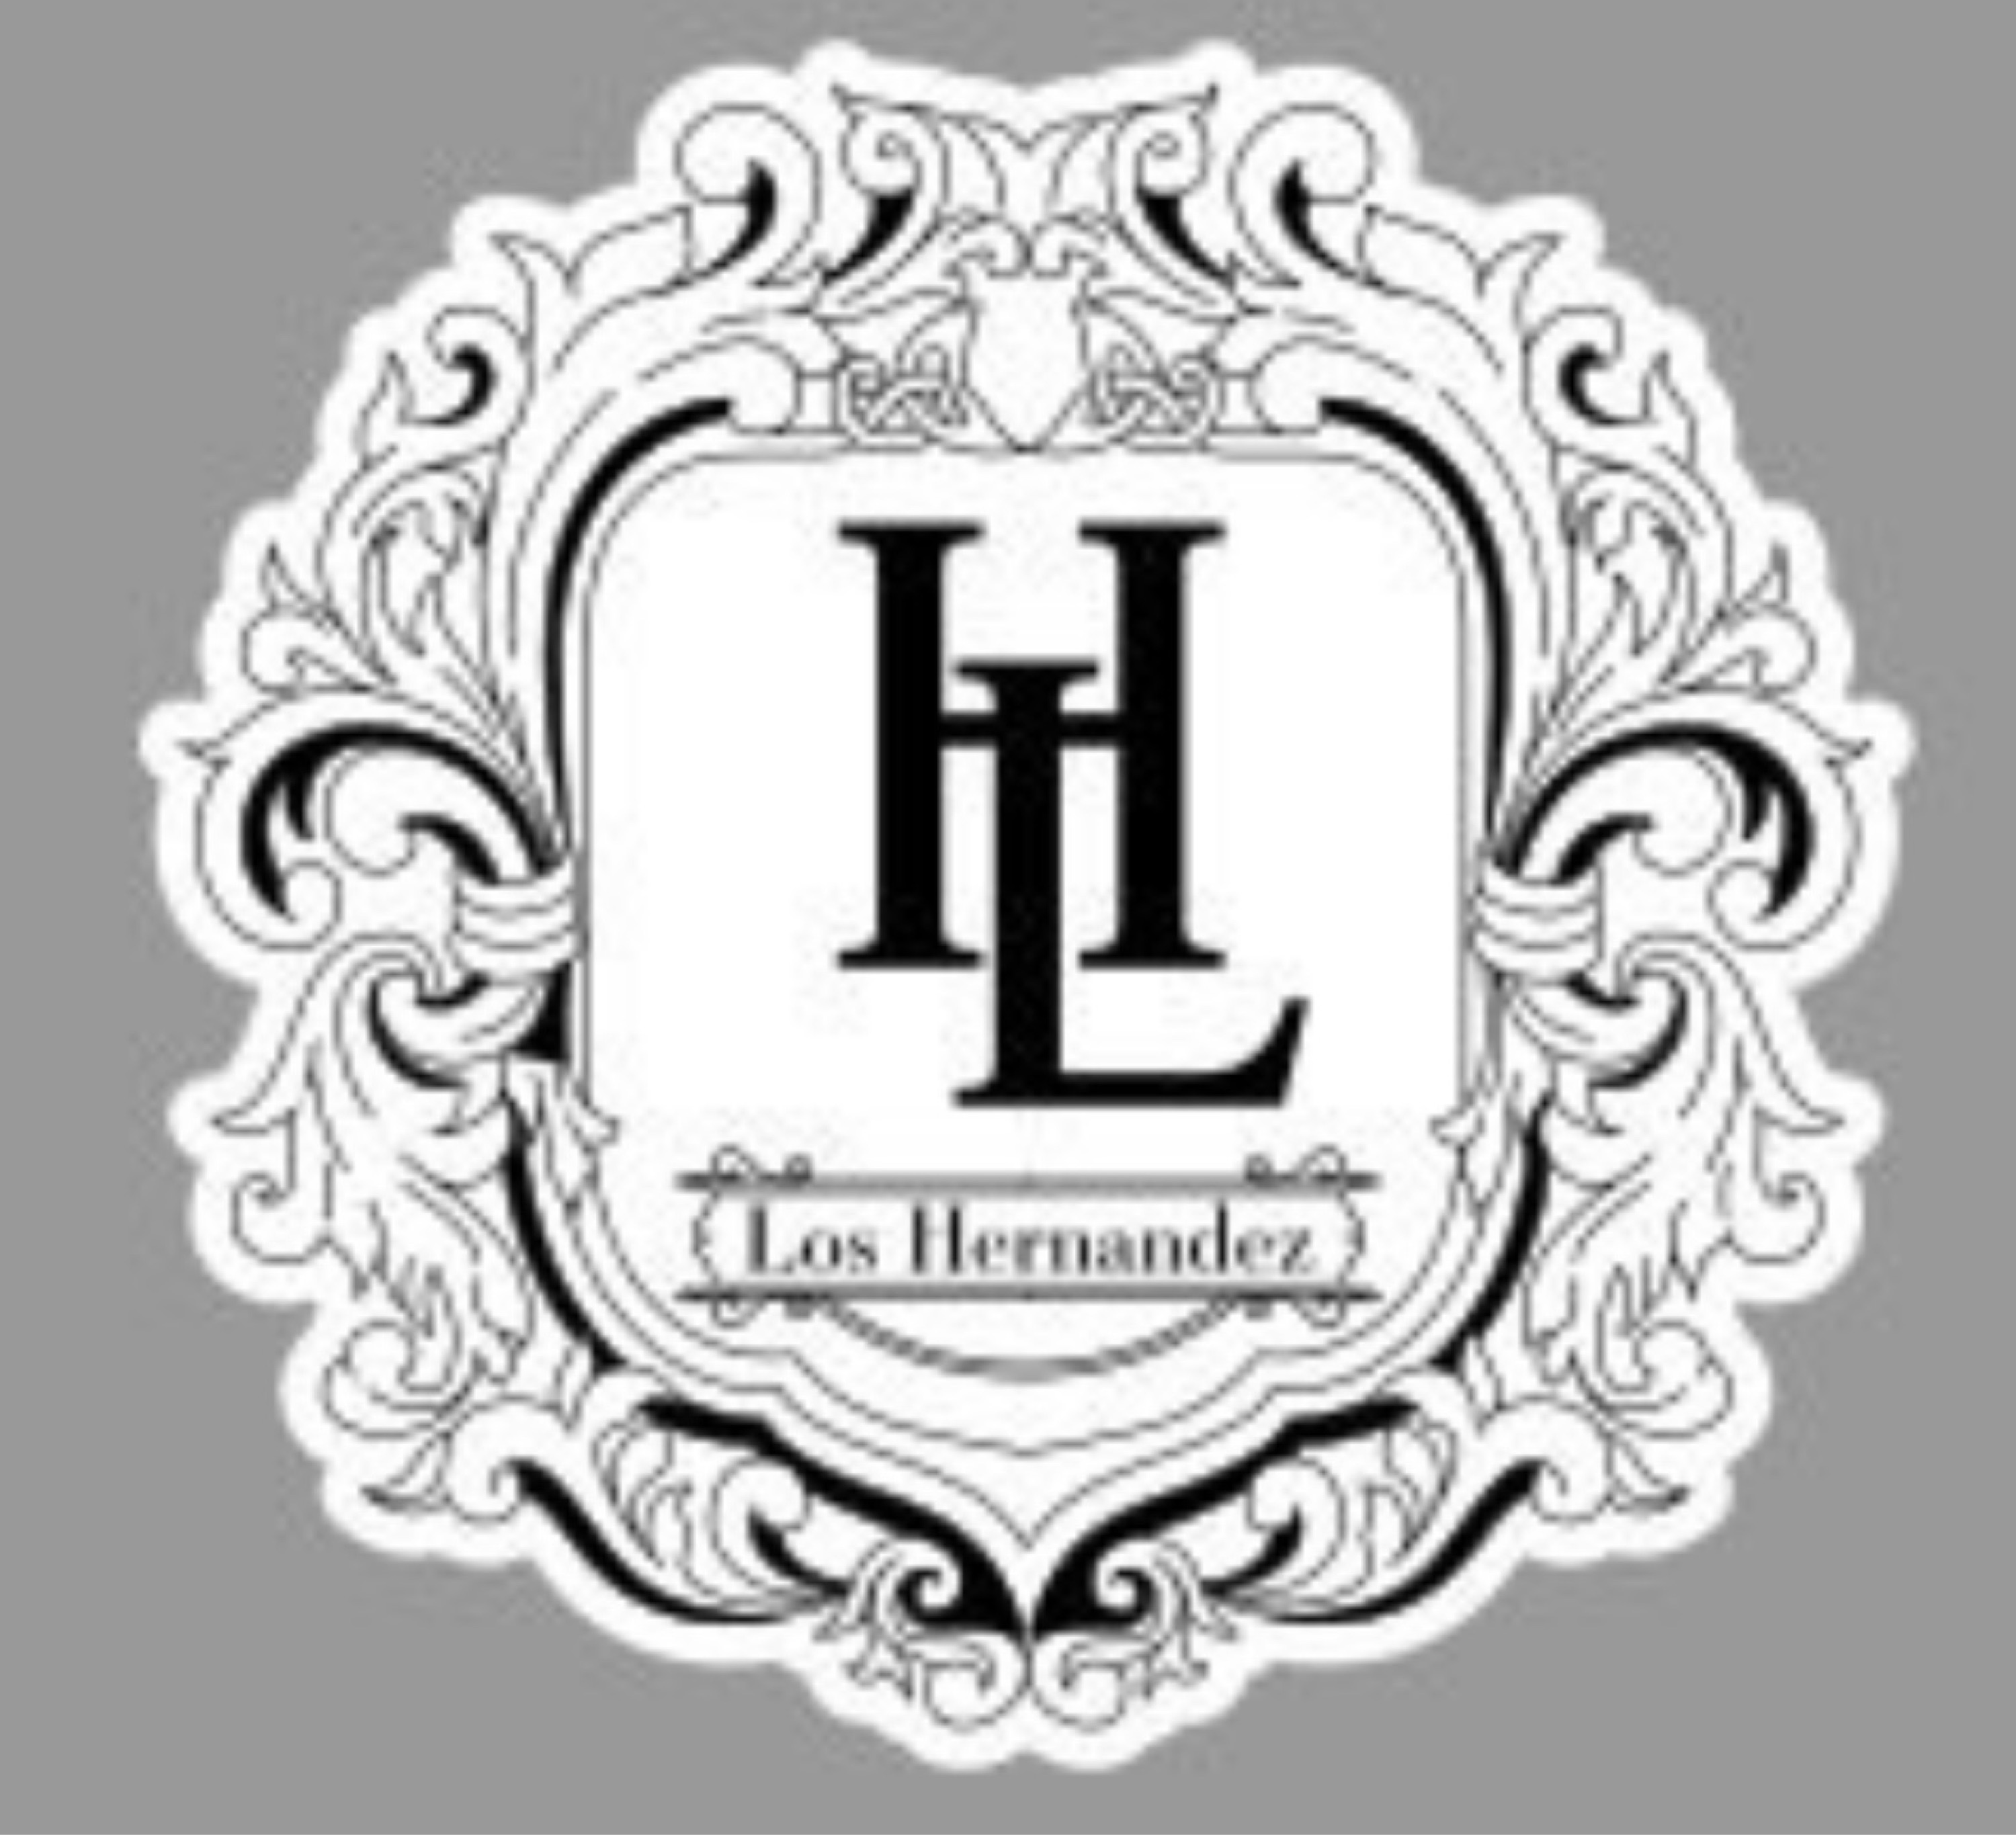 Los Hernandez Landscaping LLC Logo